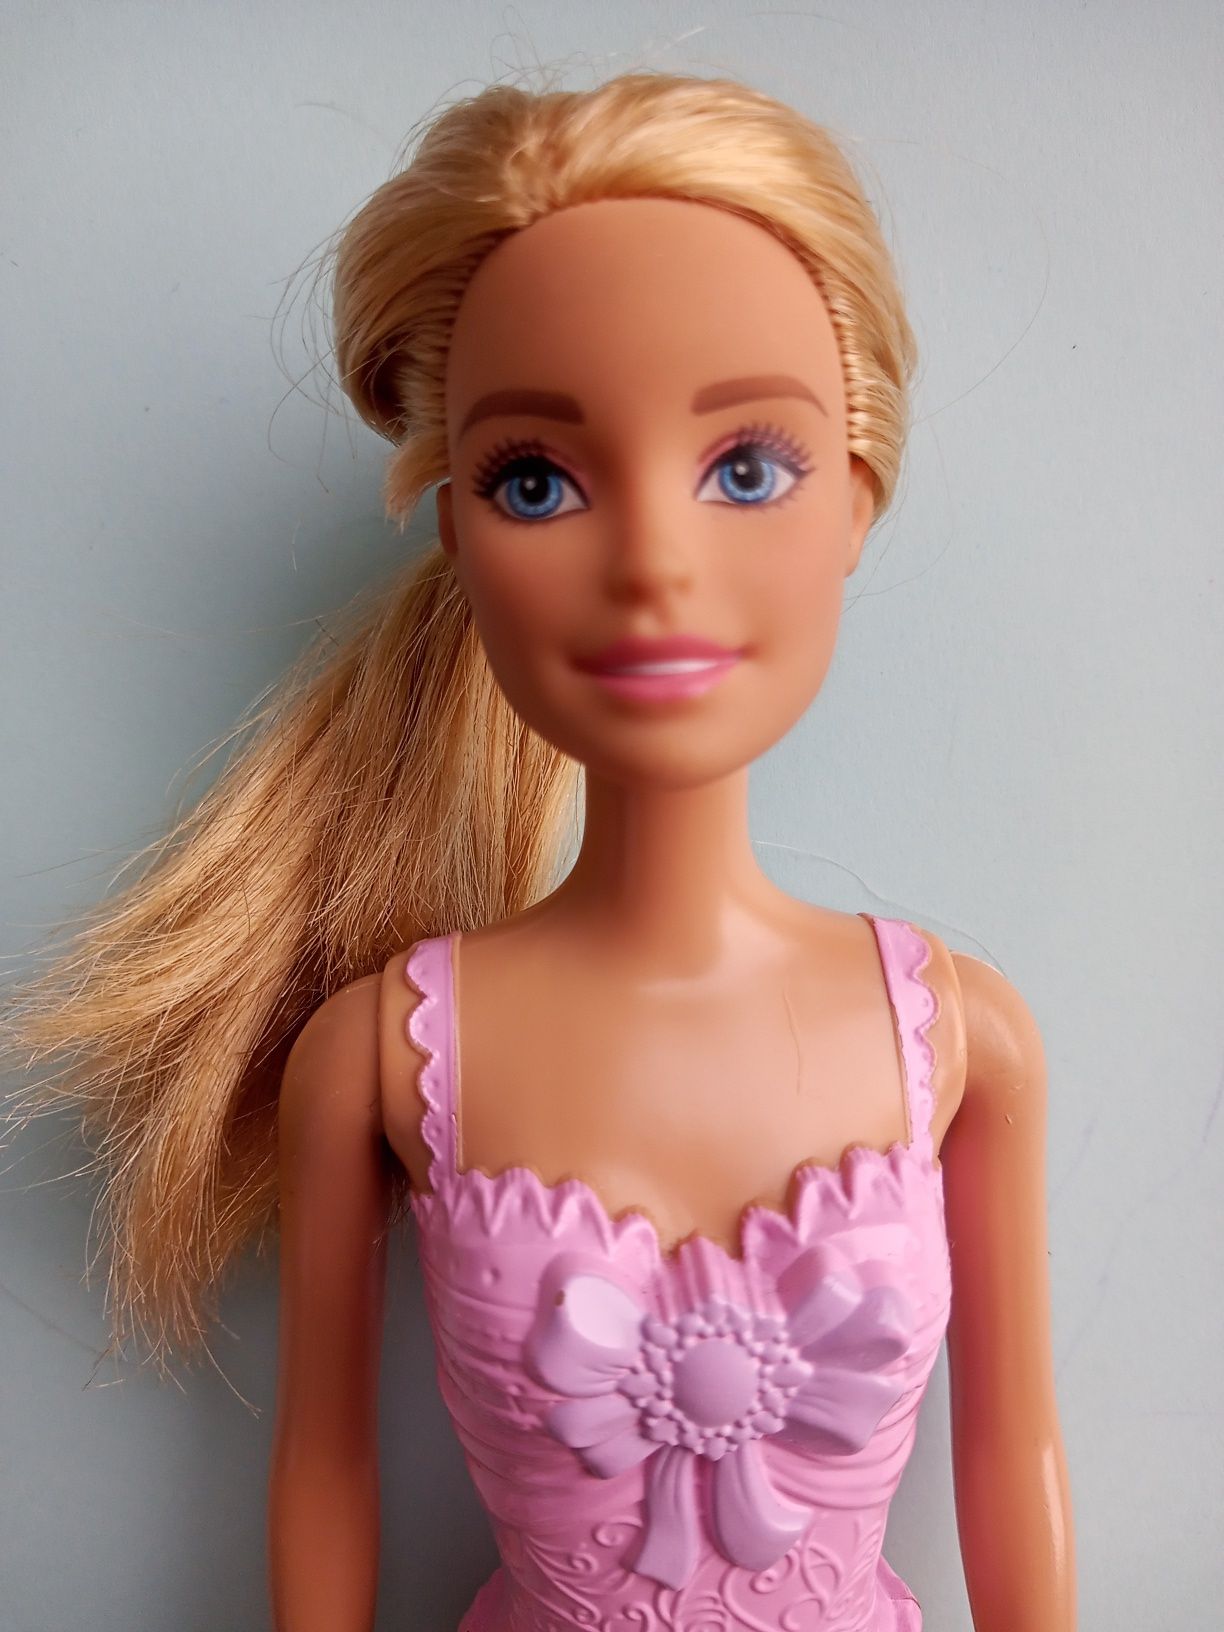 Lalka Barbie w stroju